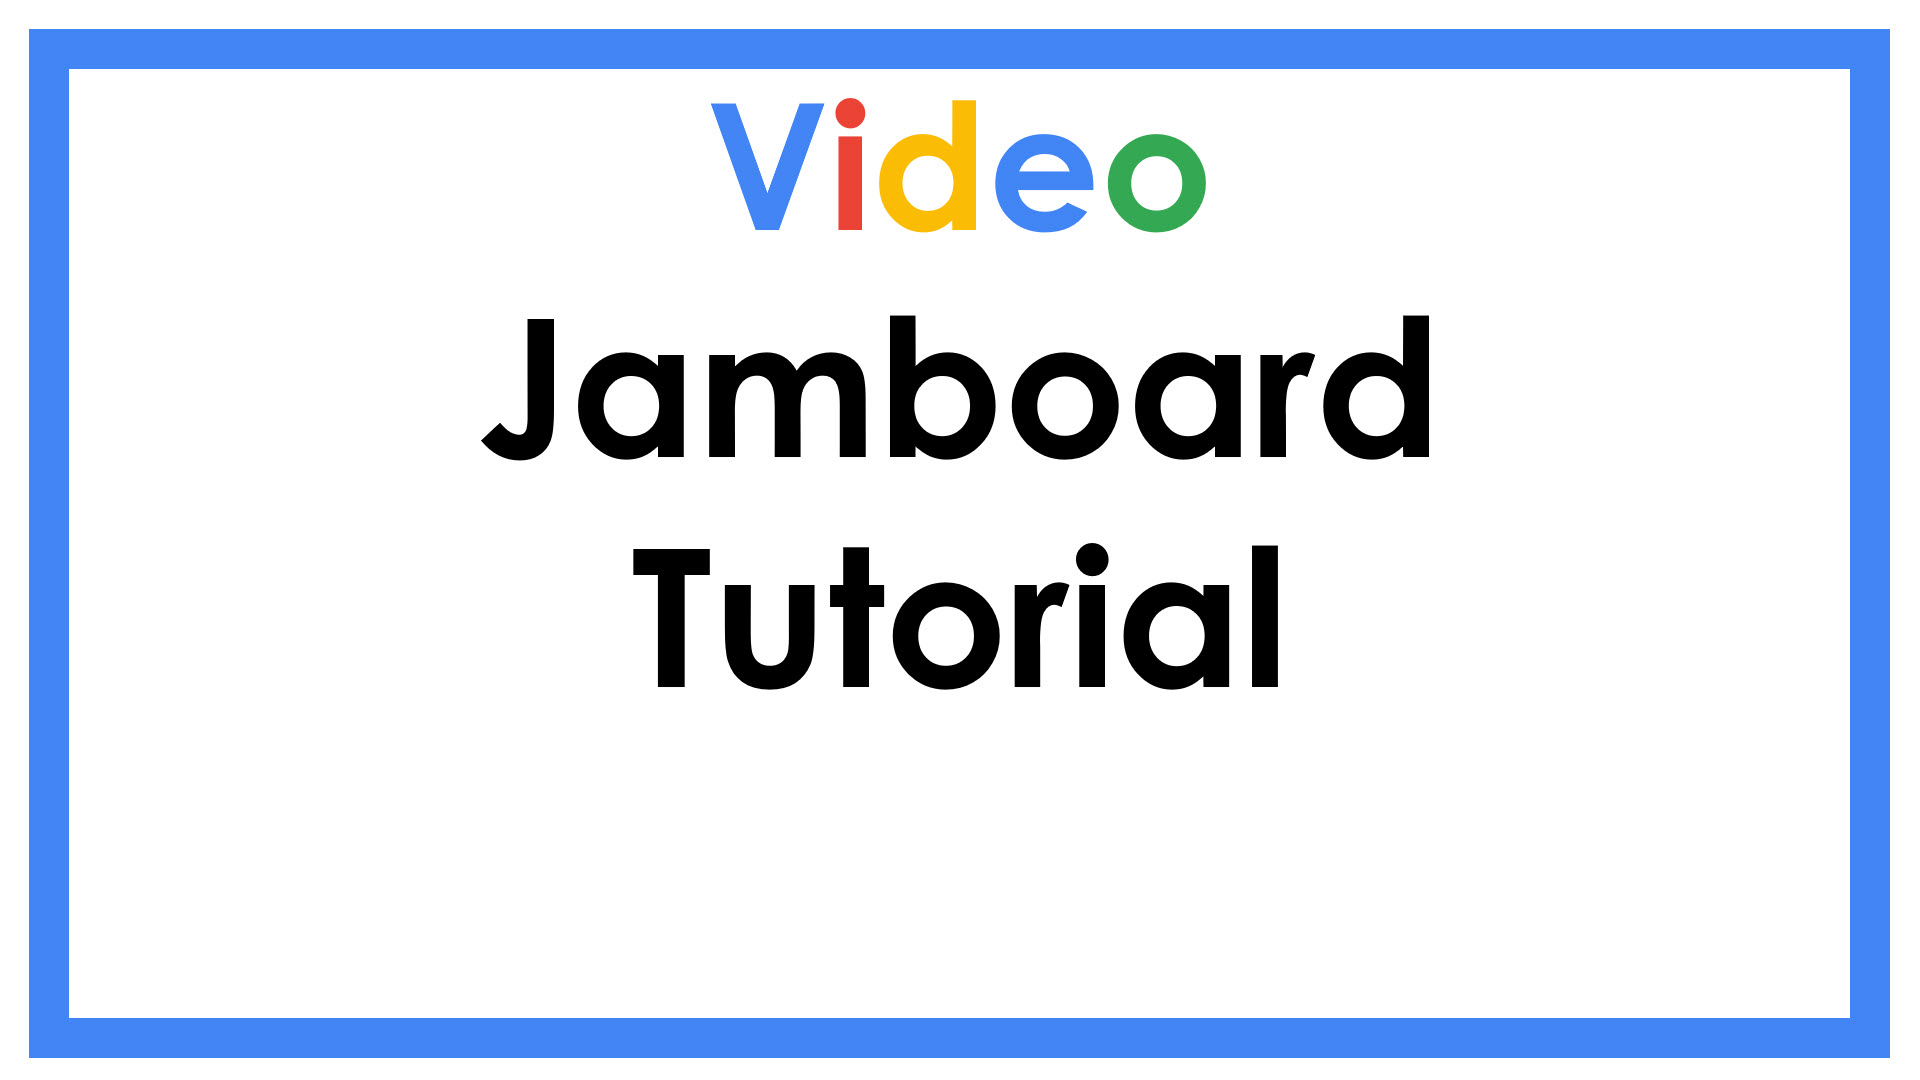 Jamboard tutorial